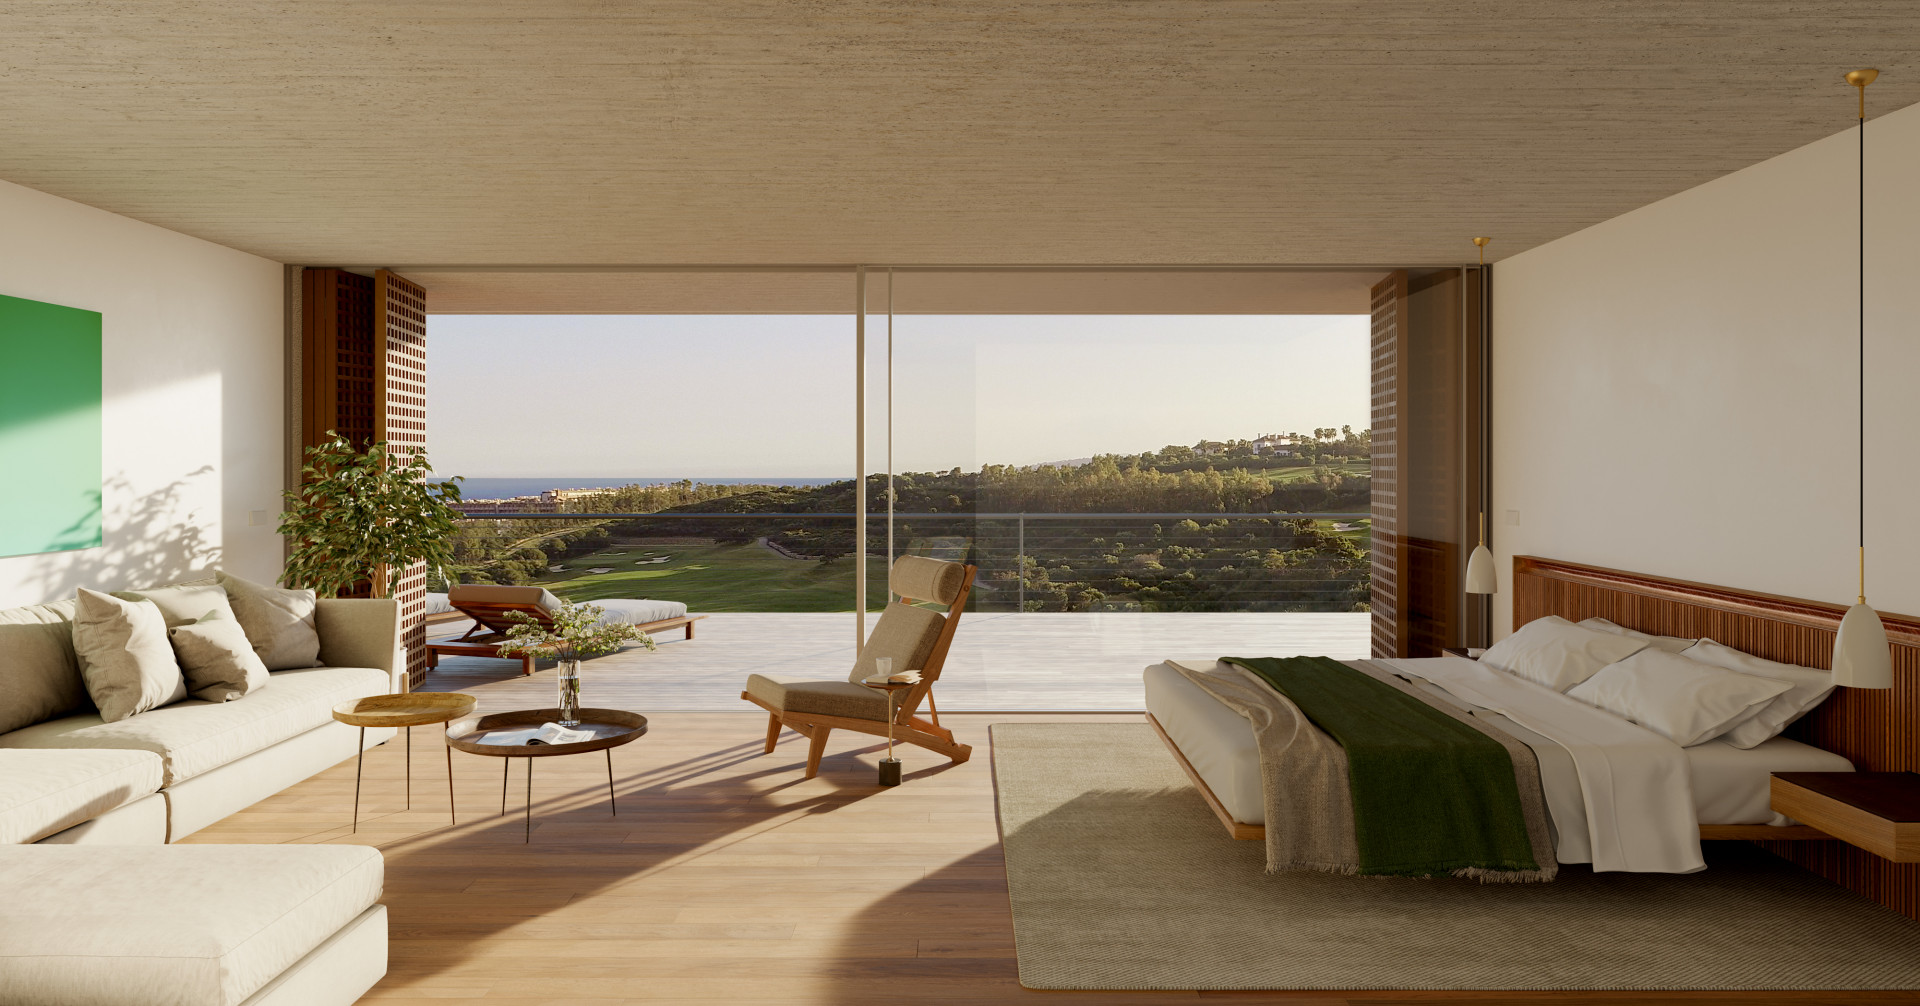 6 highly exclusive villas at Finca Cortesin, designed by award winning architect Marcio Kogan. in Casares